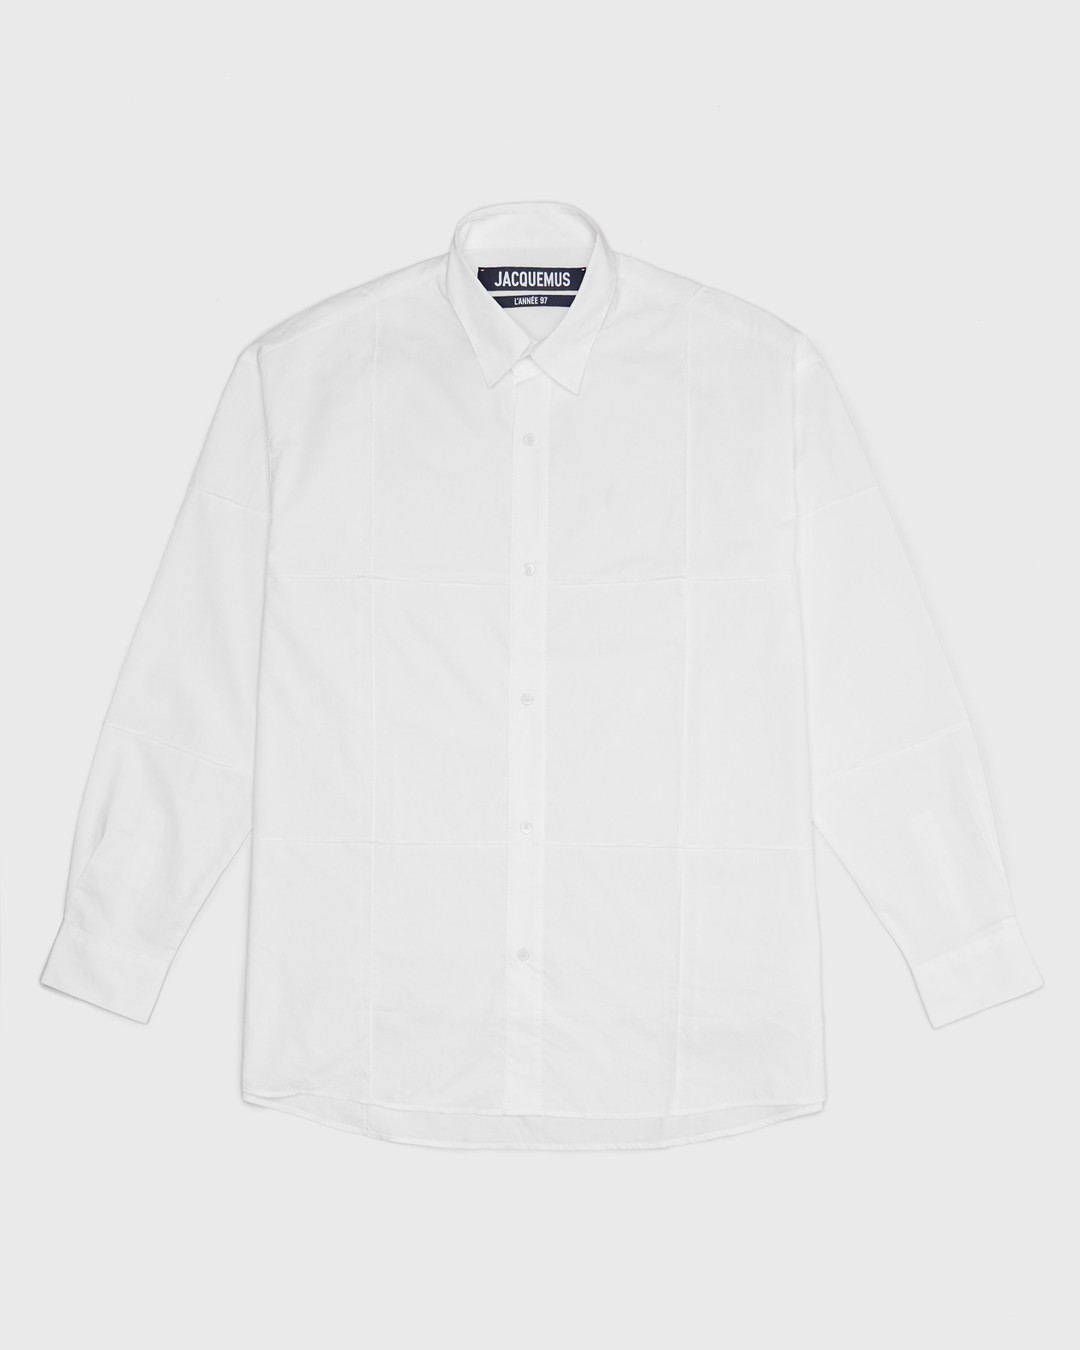 JACQUEMUS – Le Chemise Carro White - Shirts - White - Image 1